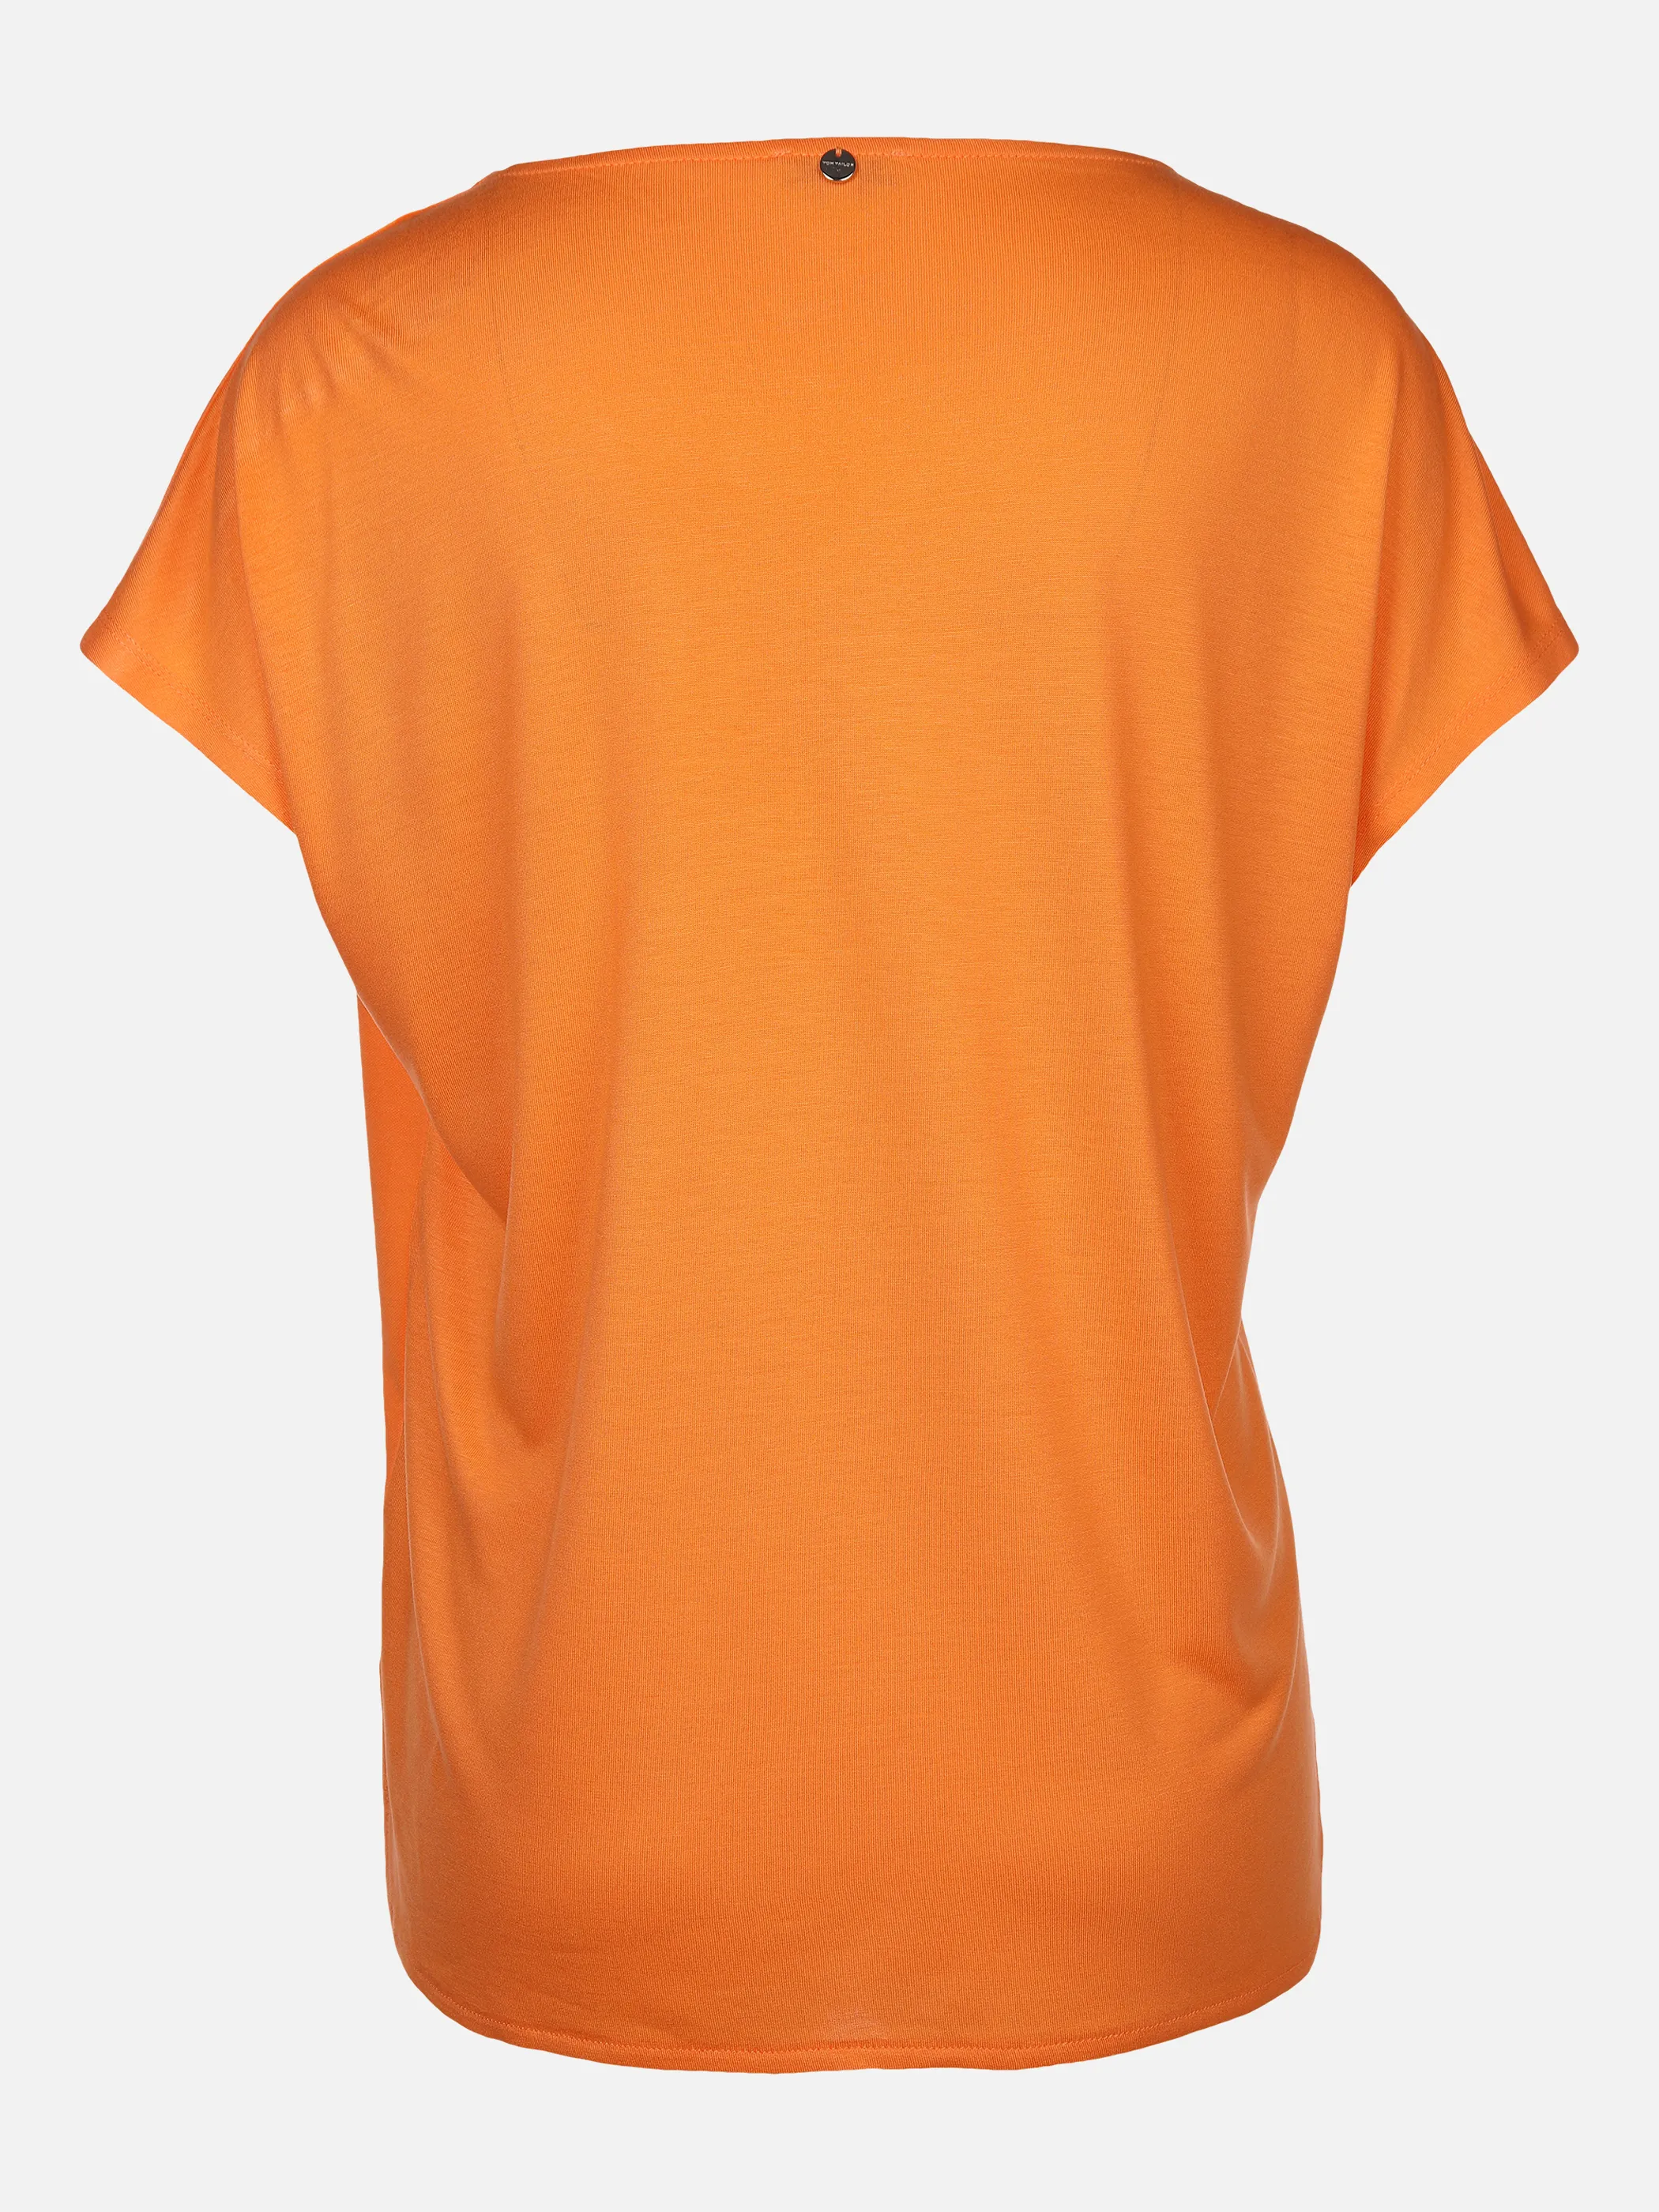 Tom Tailor 1035892 NOS T-shirt fabric mix Orange 874870 29751 2